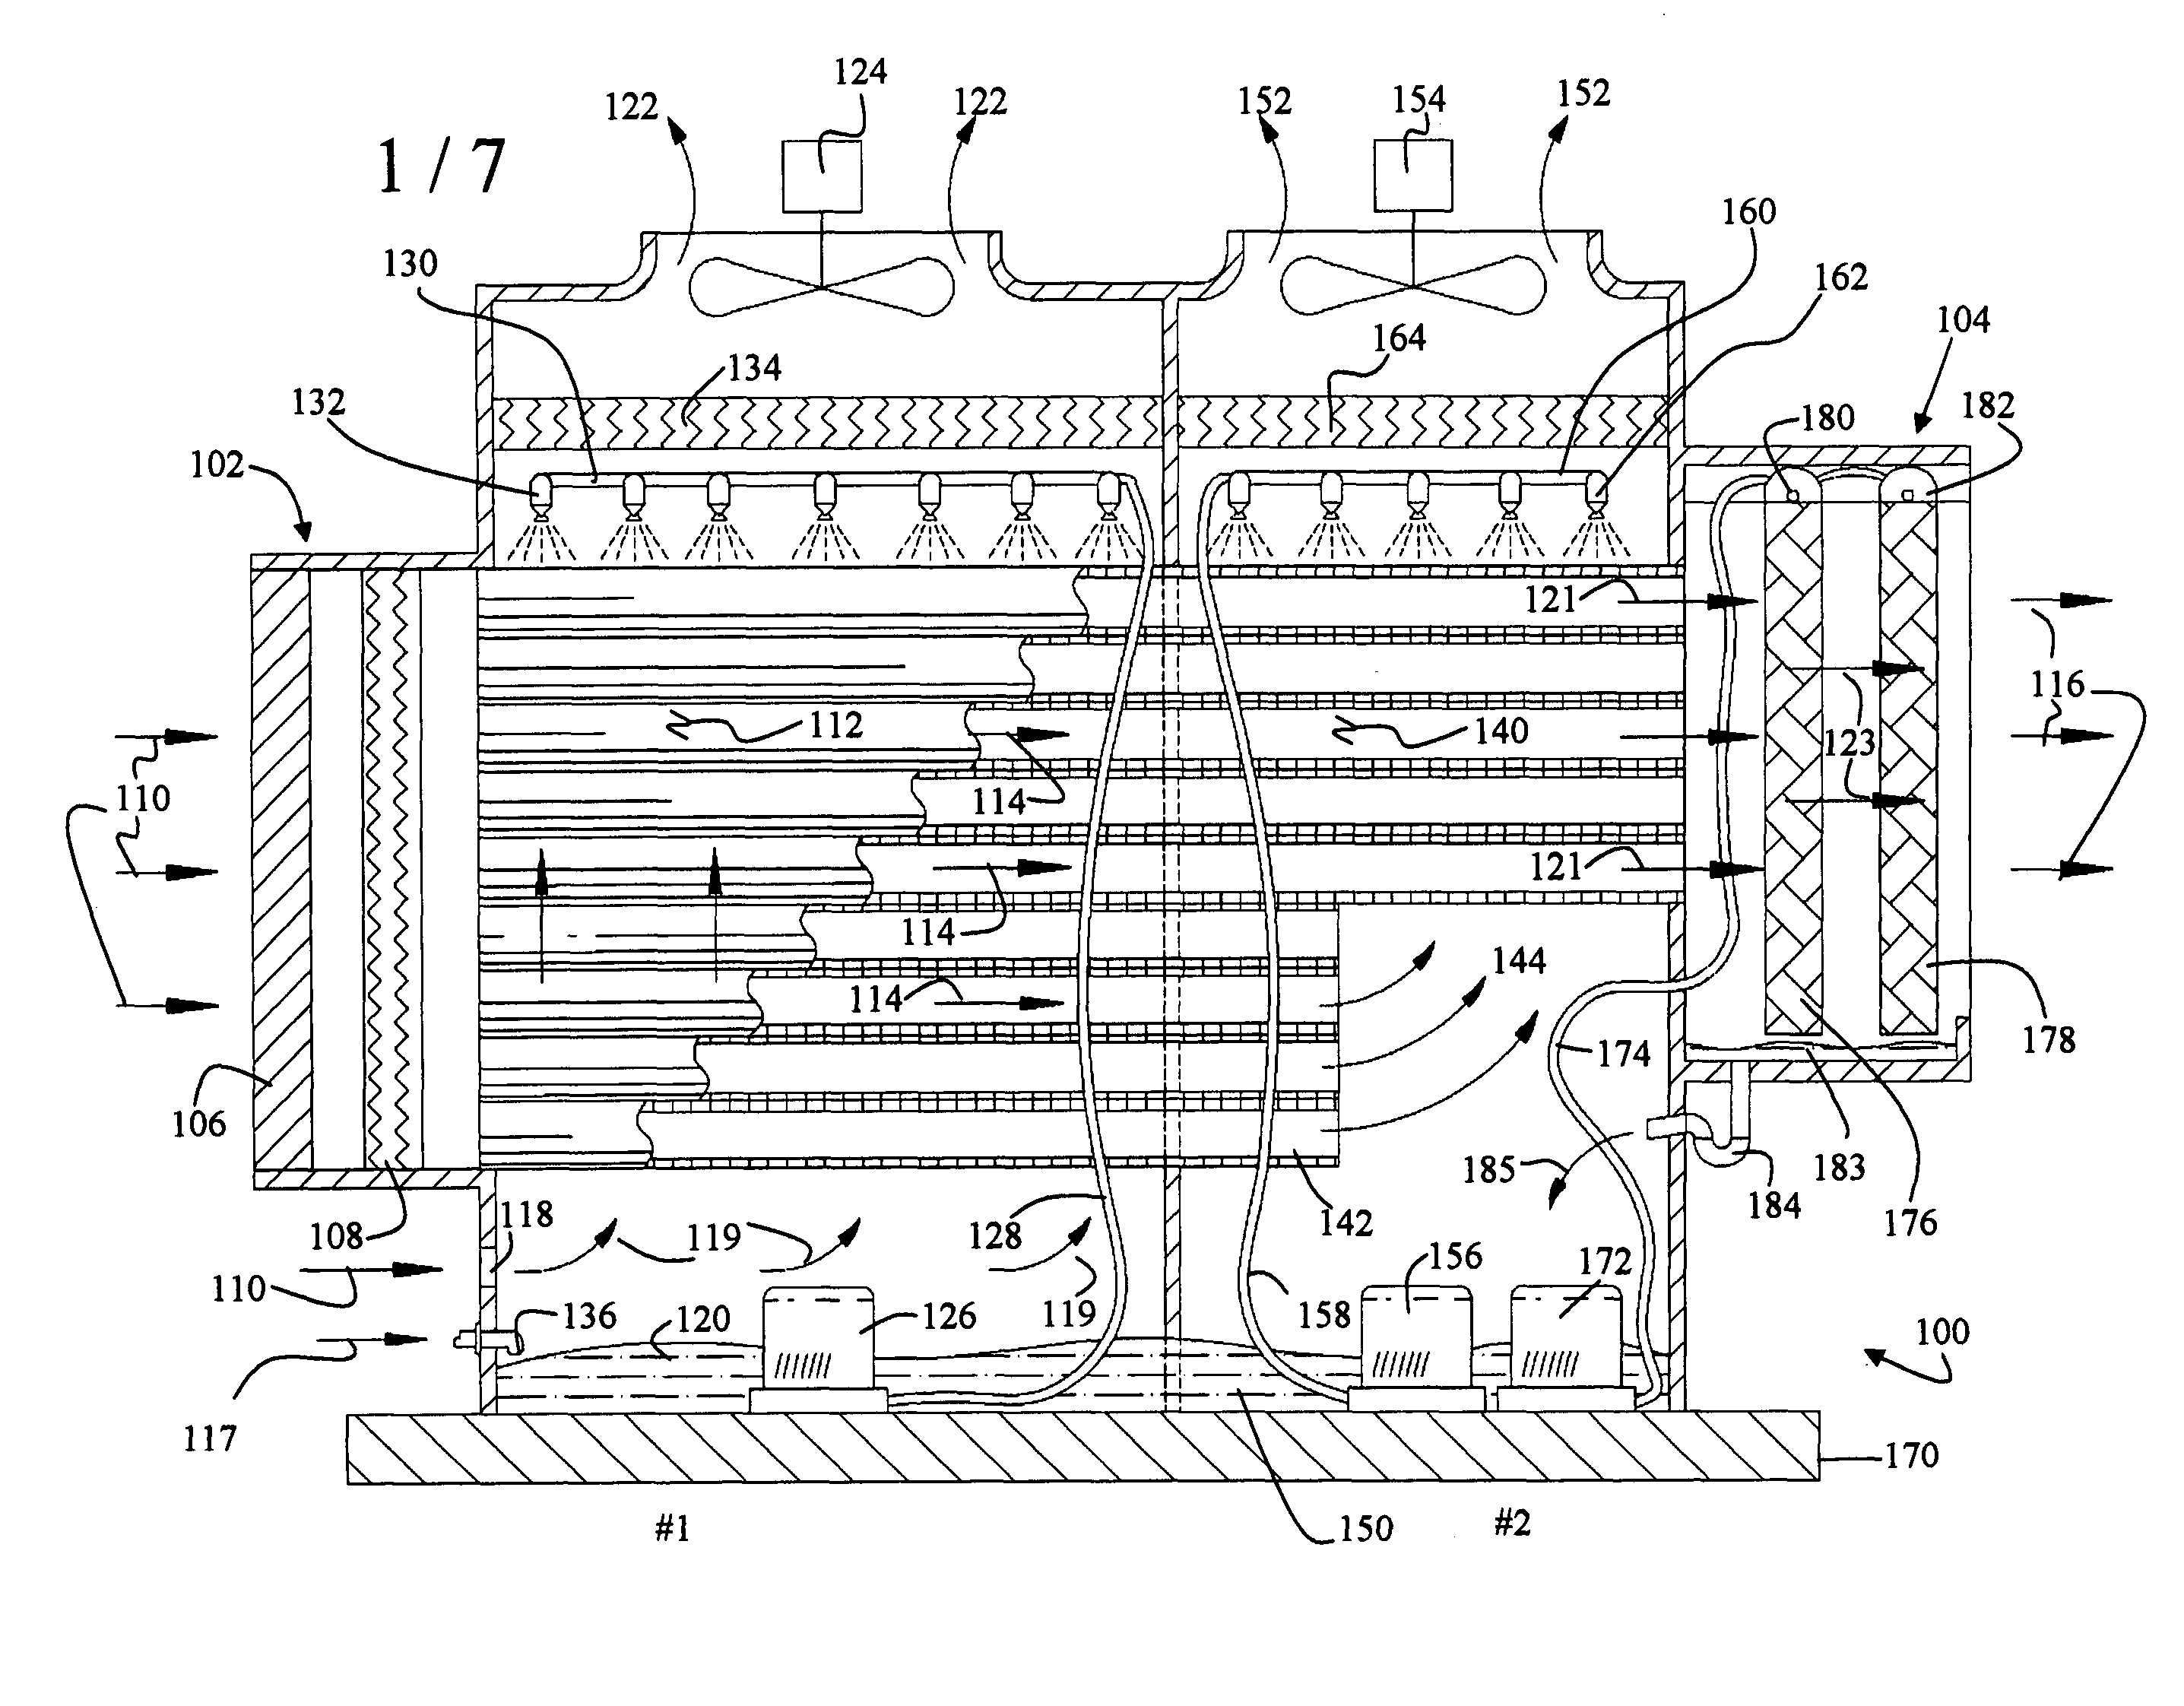 Multi-stage hybrid evaporative cooling system